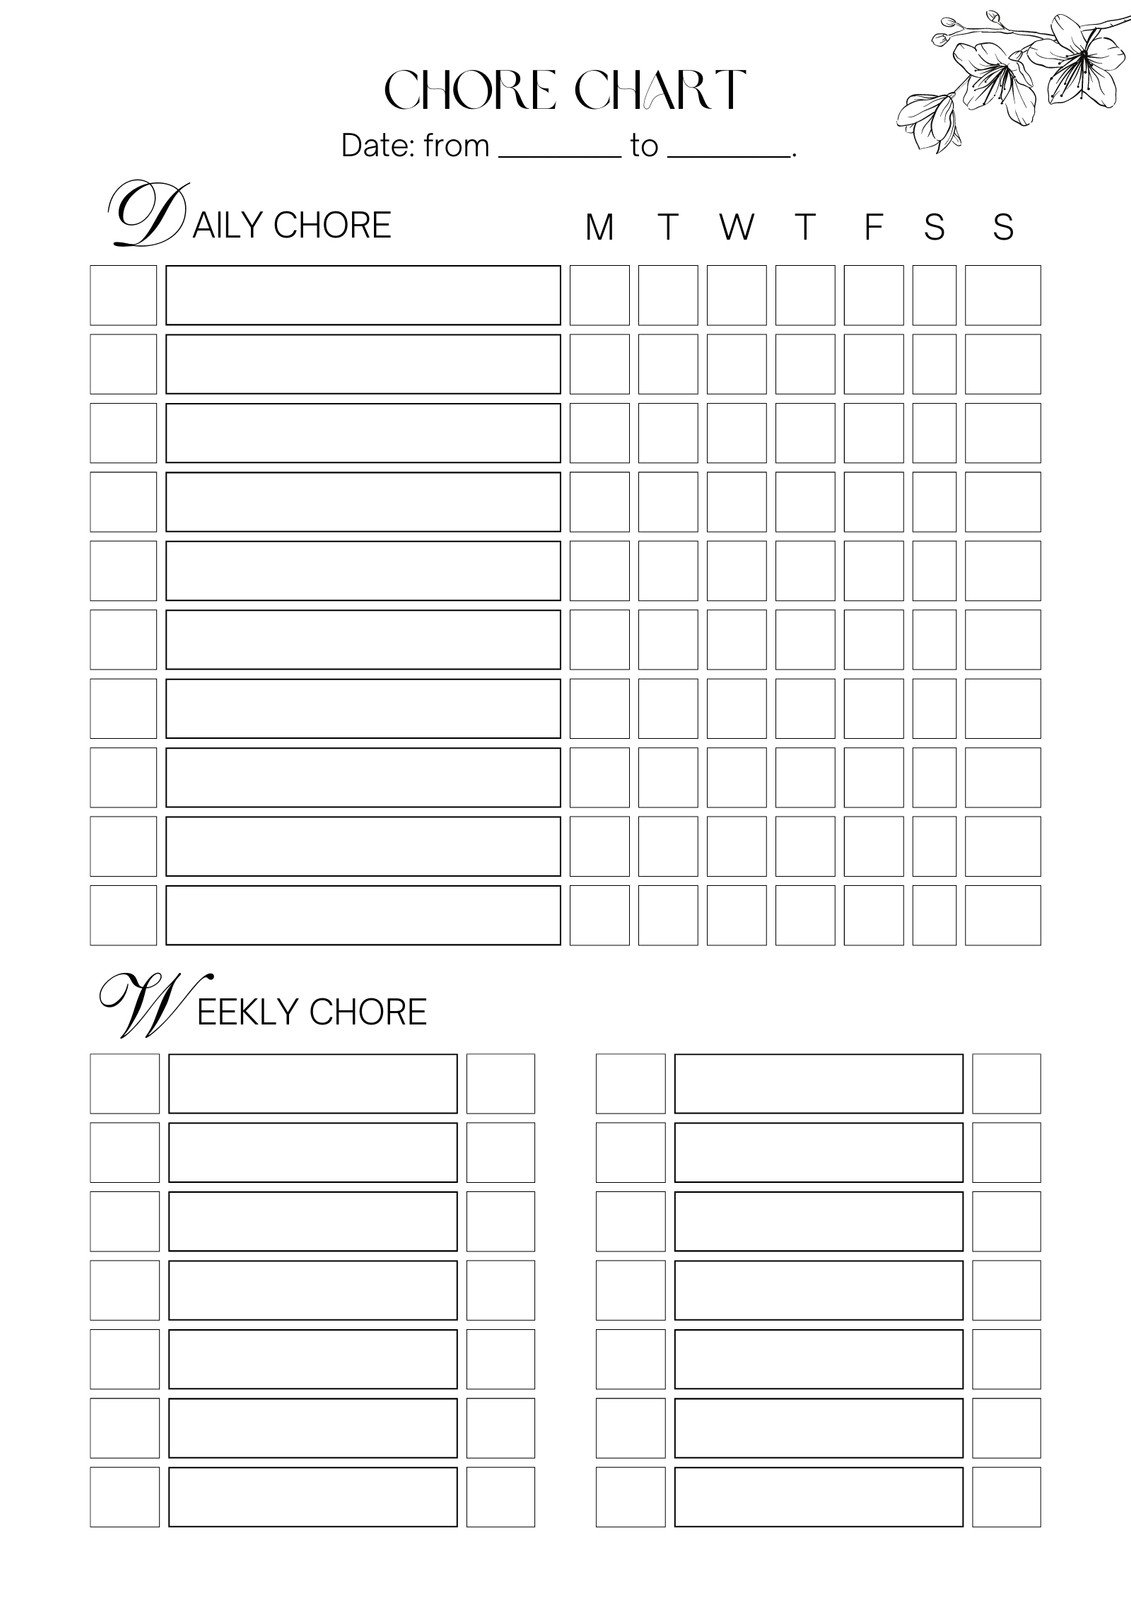 Free Customizable Chore Chart Templates To Print Canva - Charts Free Printable